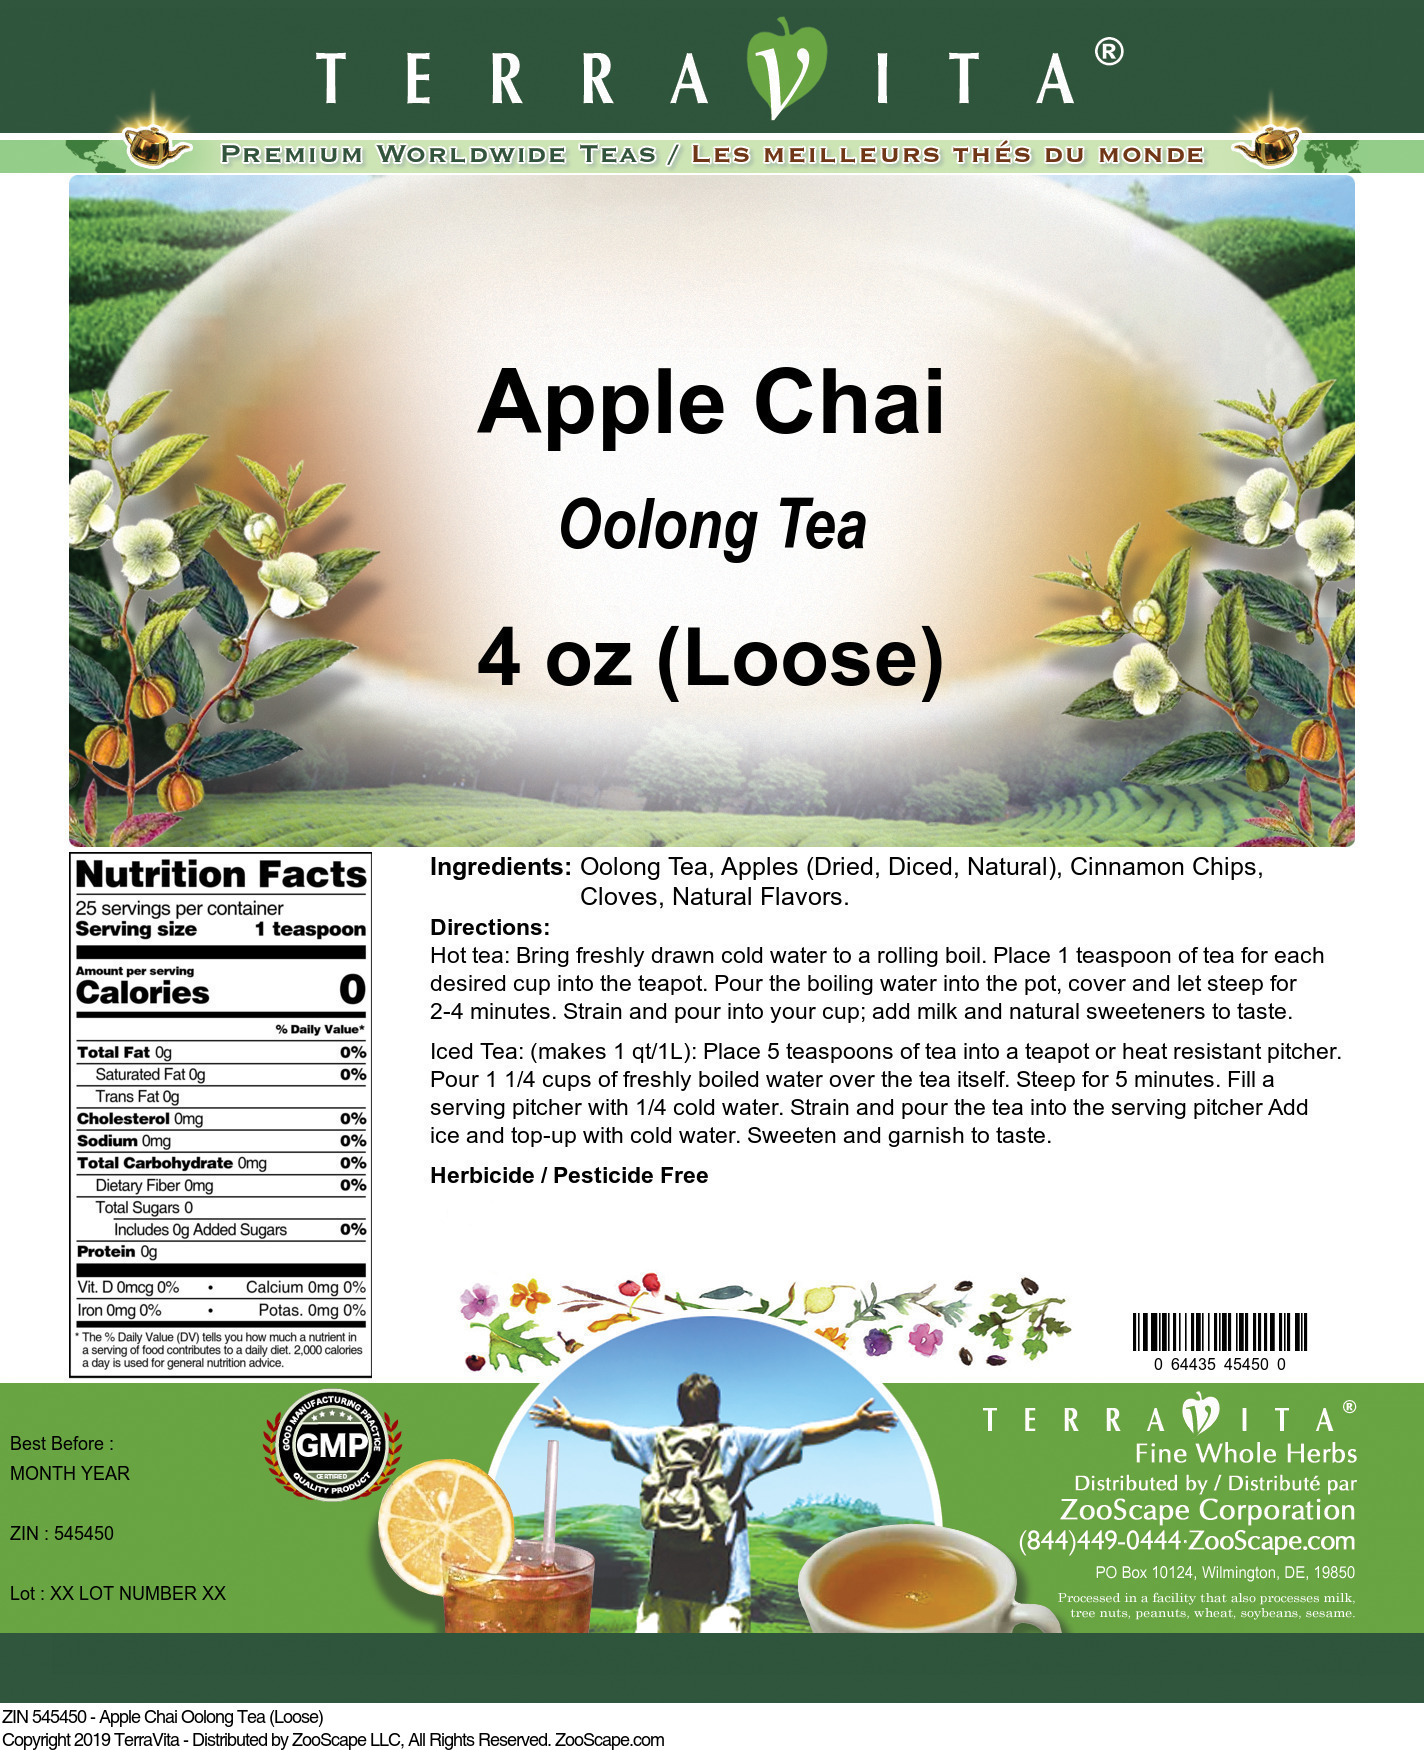 Apple Chai Oolong Tea (Loose) - Label